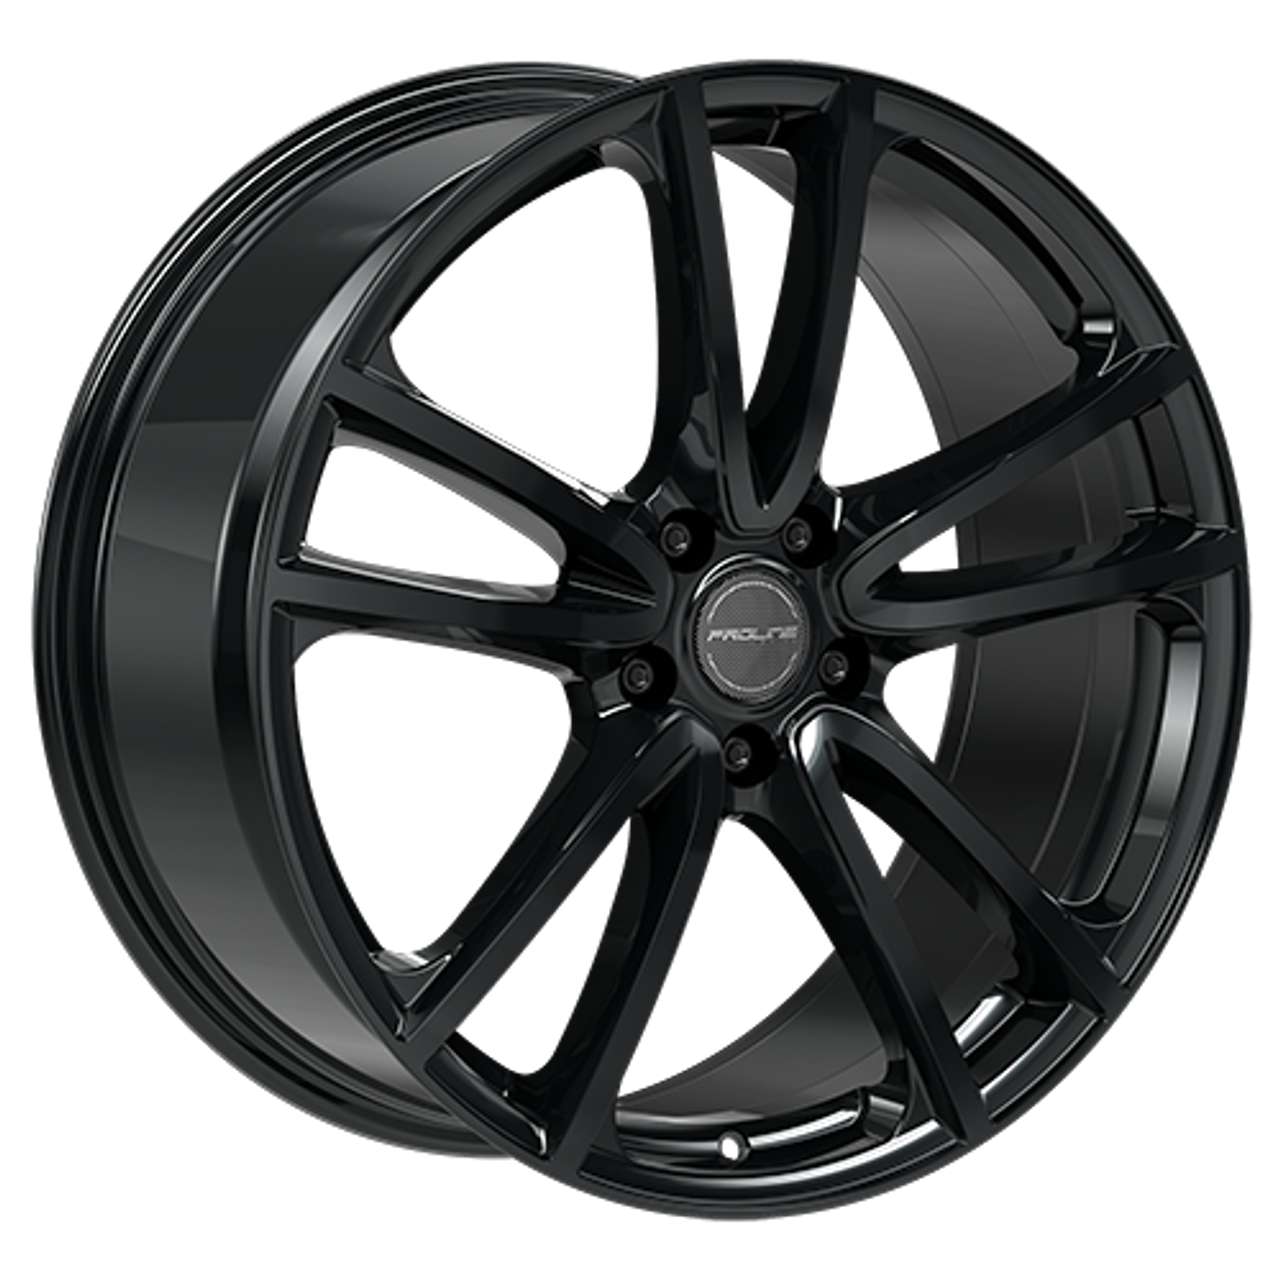 PROLINE CX300 black glossy 8.5Jx20 5x114.3 ET38 von Proline